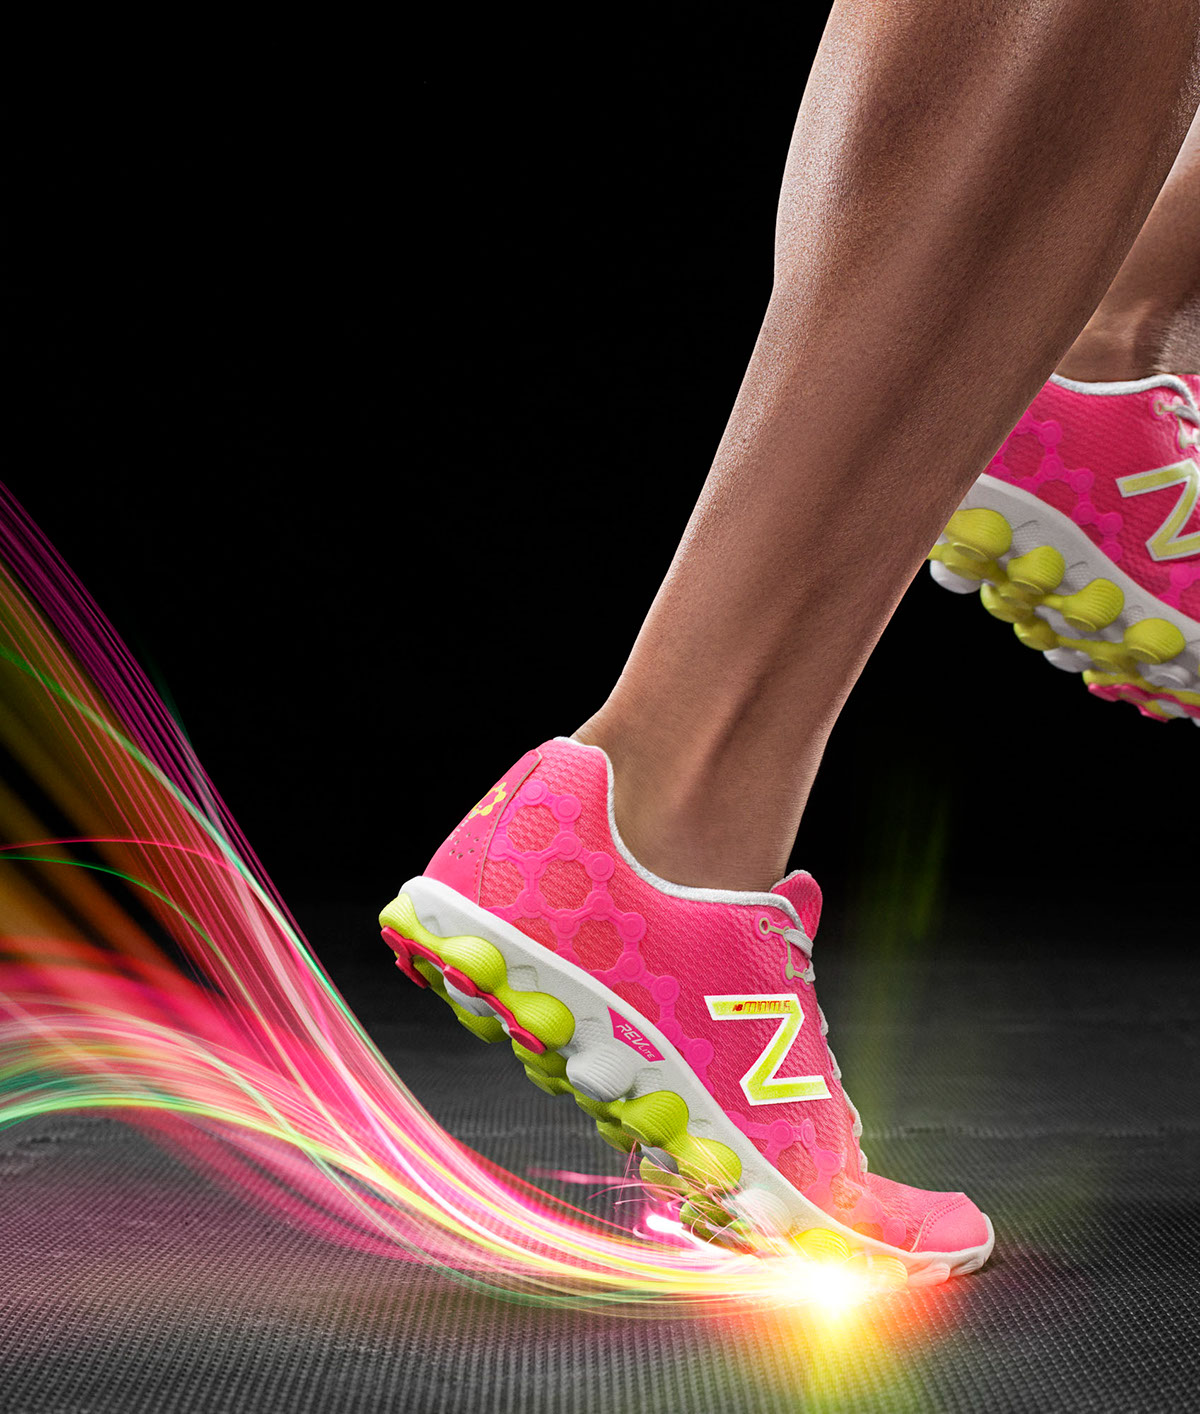 New Balance photo illustration  footwear photoshop composites shoes sports running